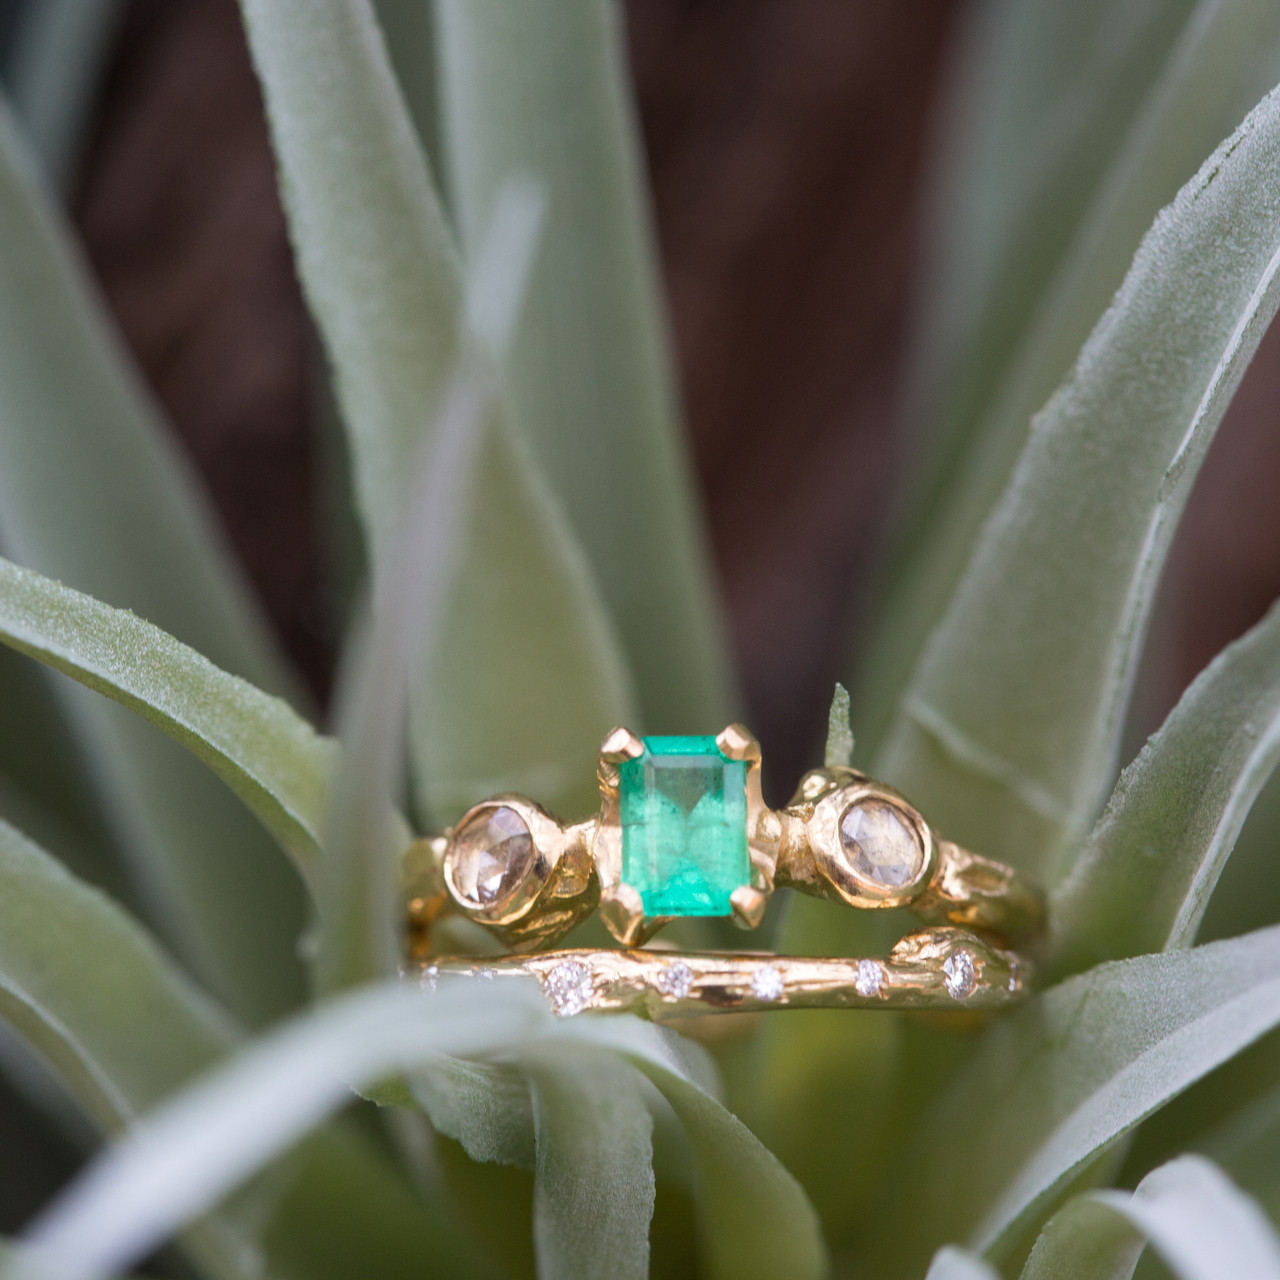 Emerald Engagement Rings - Shop Online | Vintage Diamond Ring